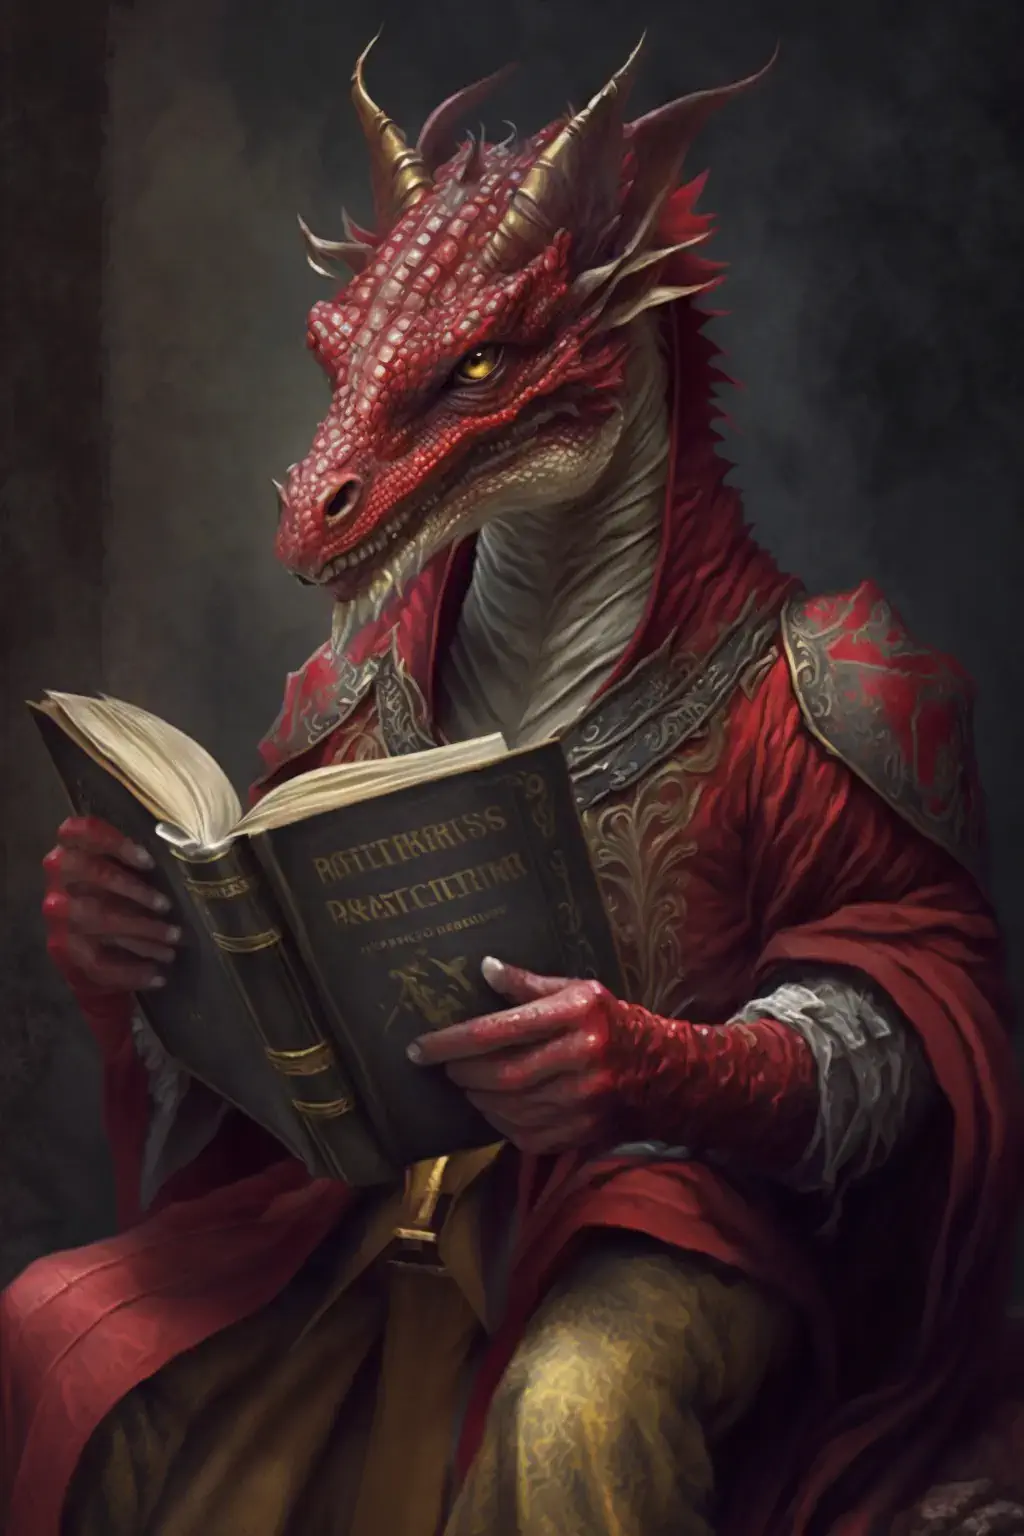 Drakosha_wise_sapient_red_dragon_reading_a_book_979746d0-a839-4267-a651-56f8ac75c7a6